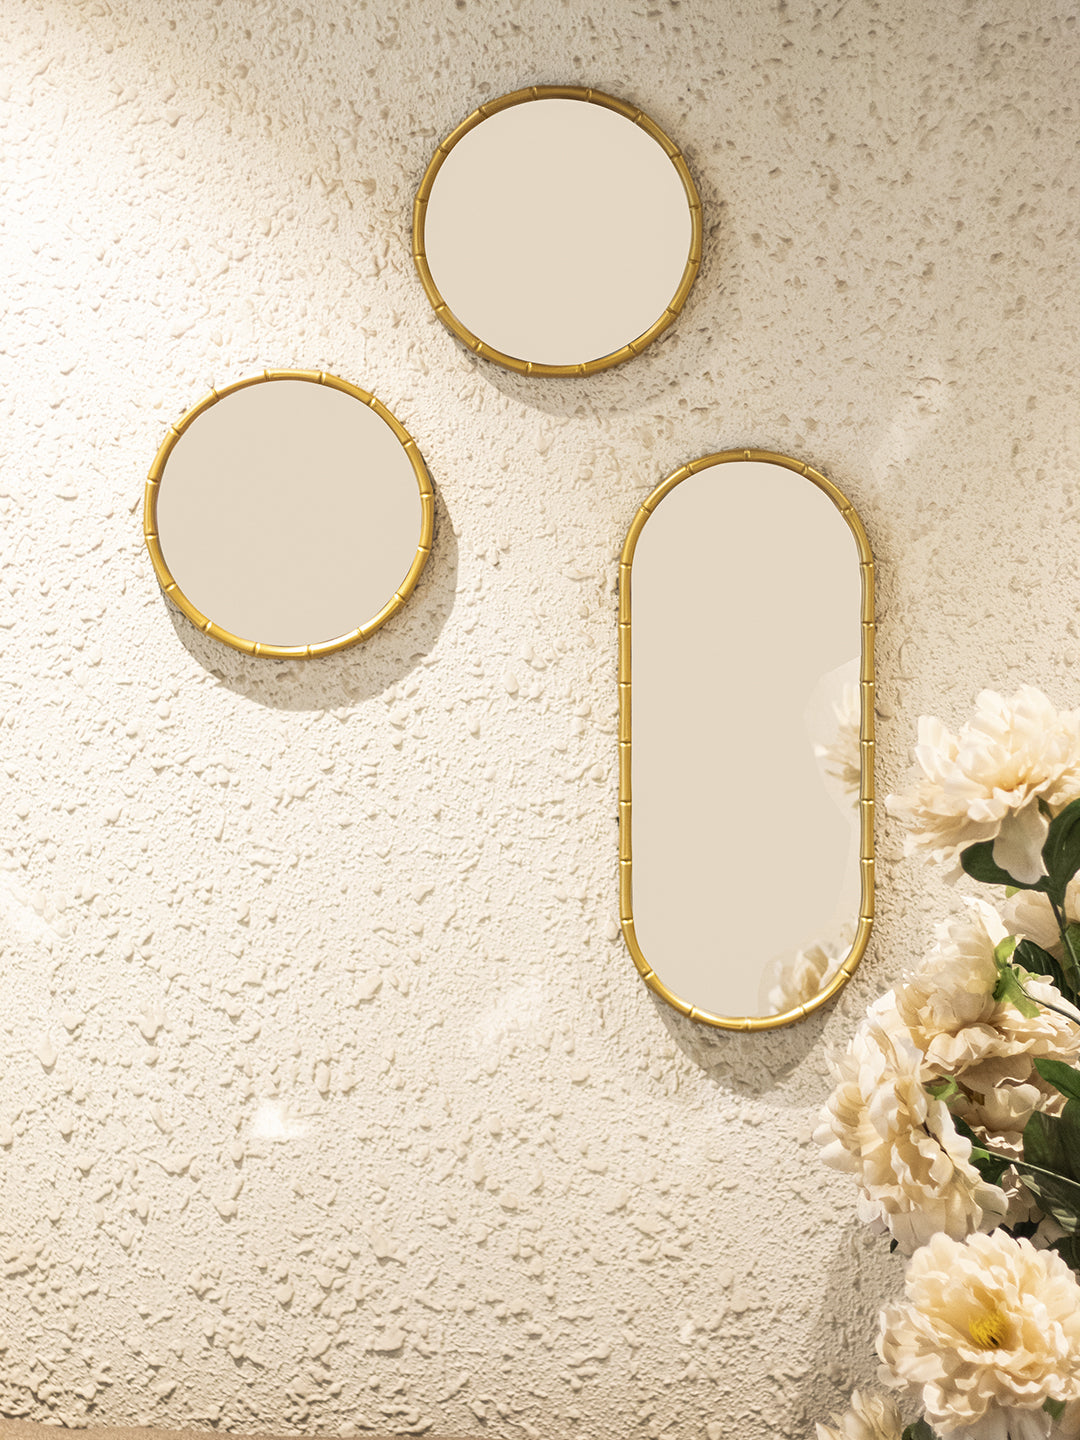 VON CASA Decorative Wall Hanging Mirrors (Set of 3 Mirrors)